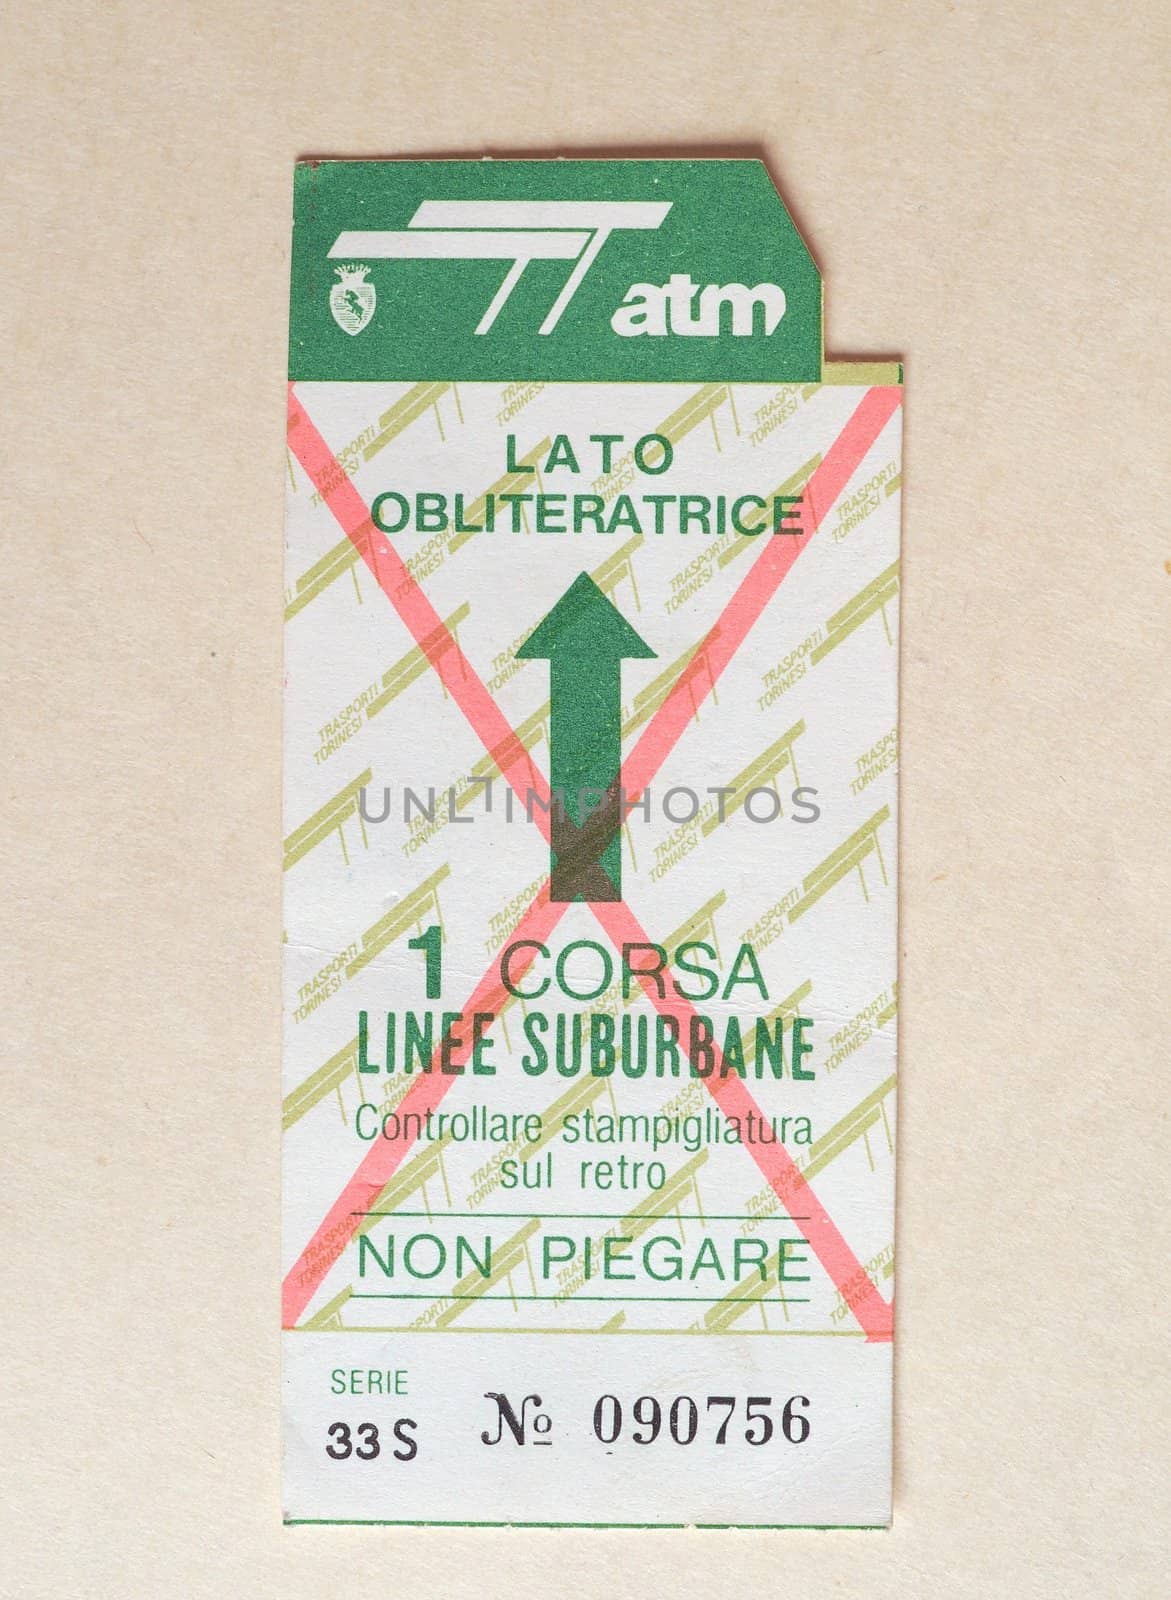 TURIN - JUN 2020: Vintage Turin public transport ticket by claudiodivizia